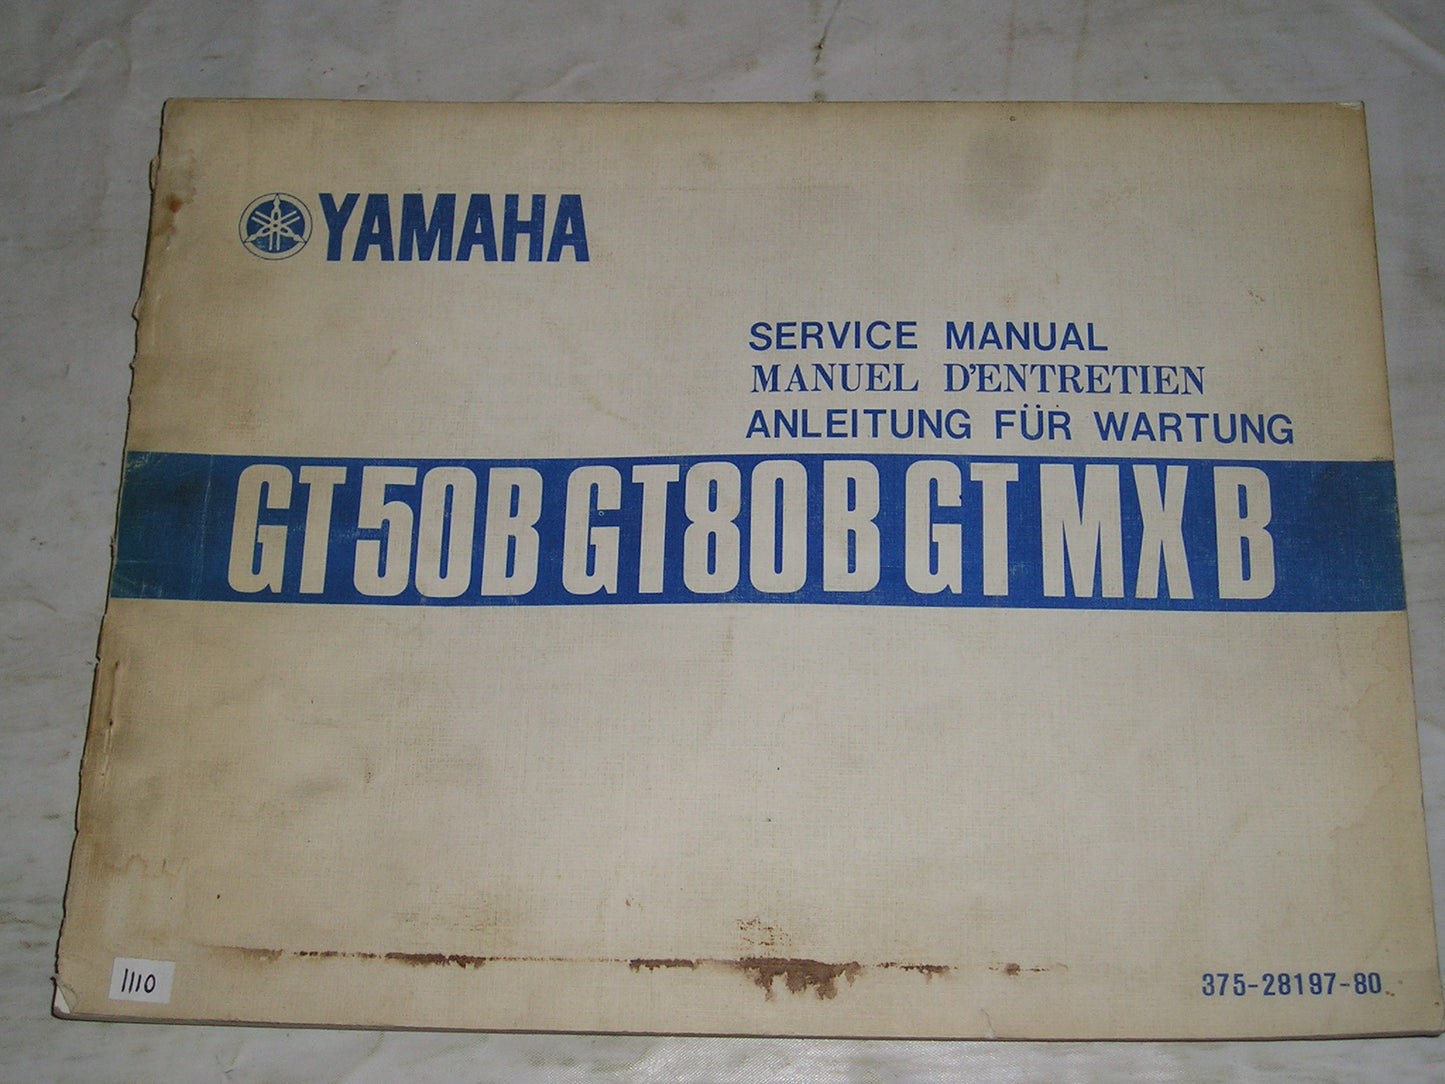 YAMAHA GT50 B GT80 B GTMX B 1975  Service Manual  375-28197-80  #1110